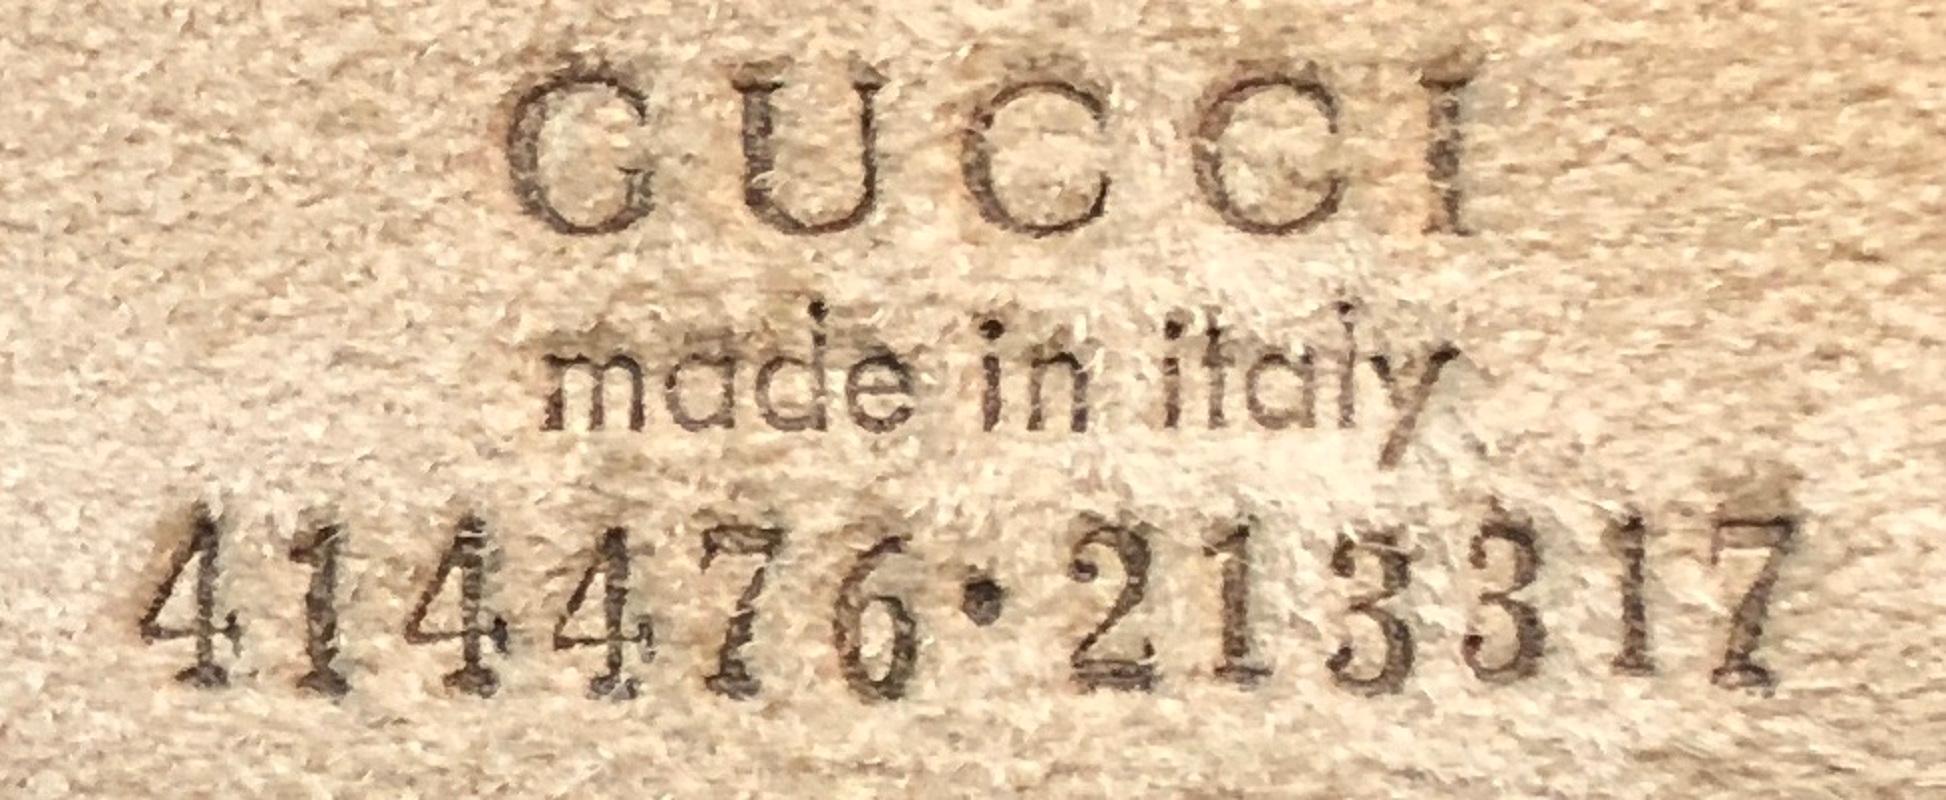 Gucci Tote GucciGhost Leather Medium 2